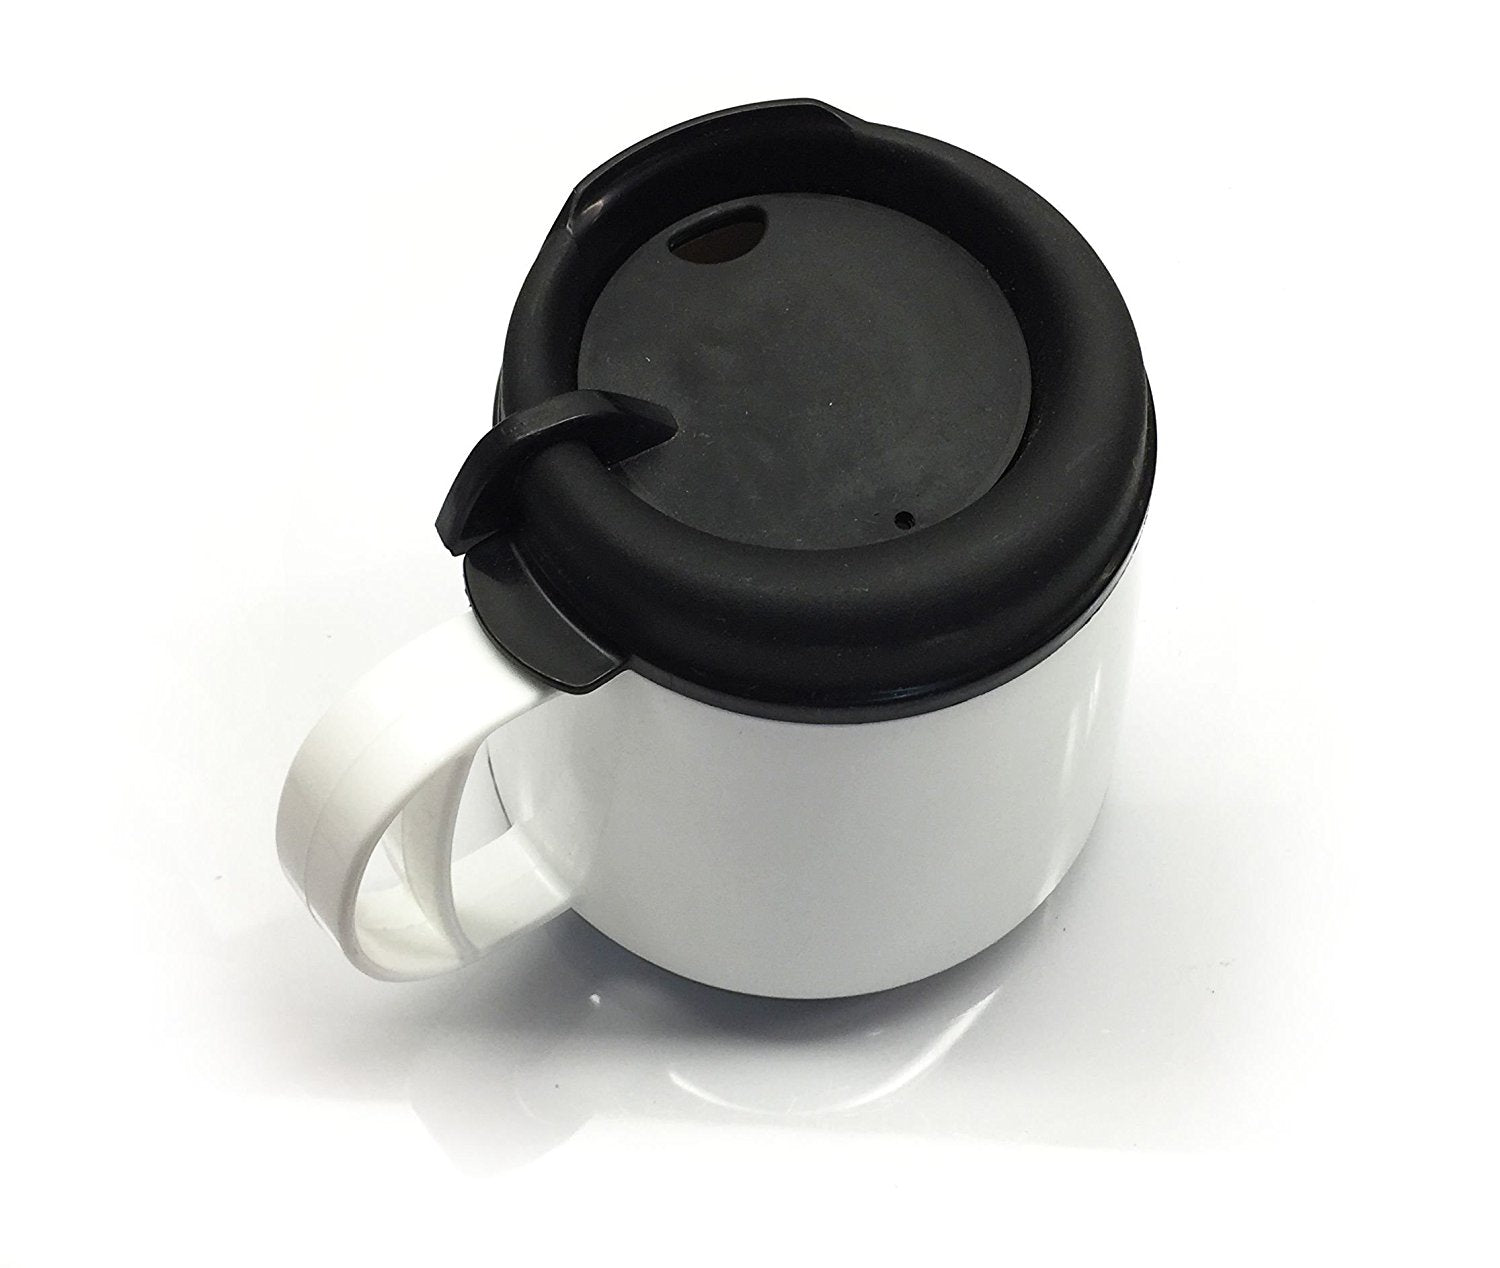 Vaso Térmico Insulated Travel Mug with Non-Slip Sleeve Football Team Thermos  Cup Ideal for Coffee